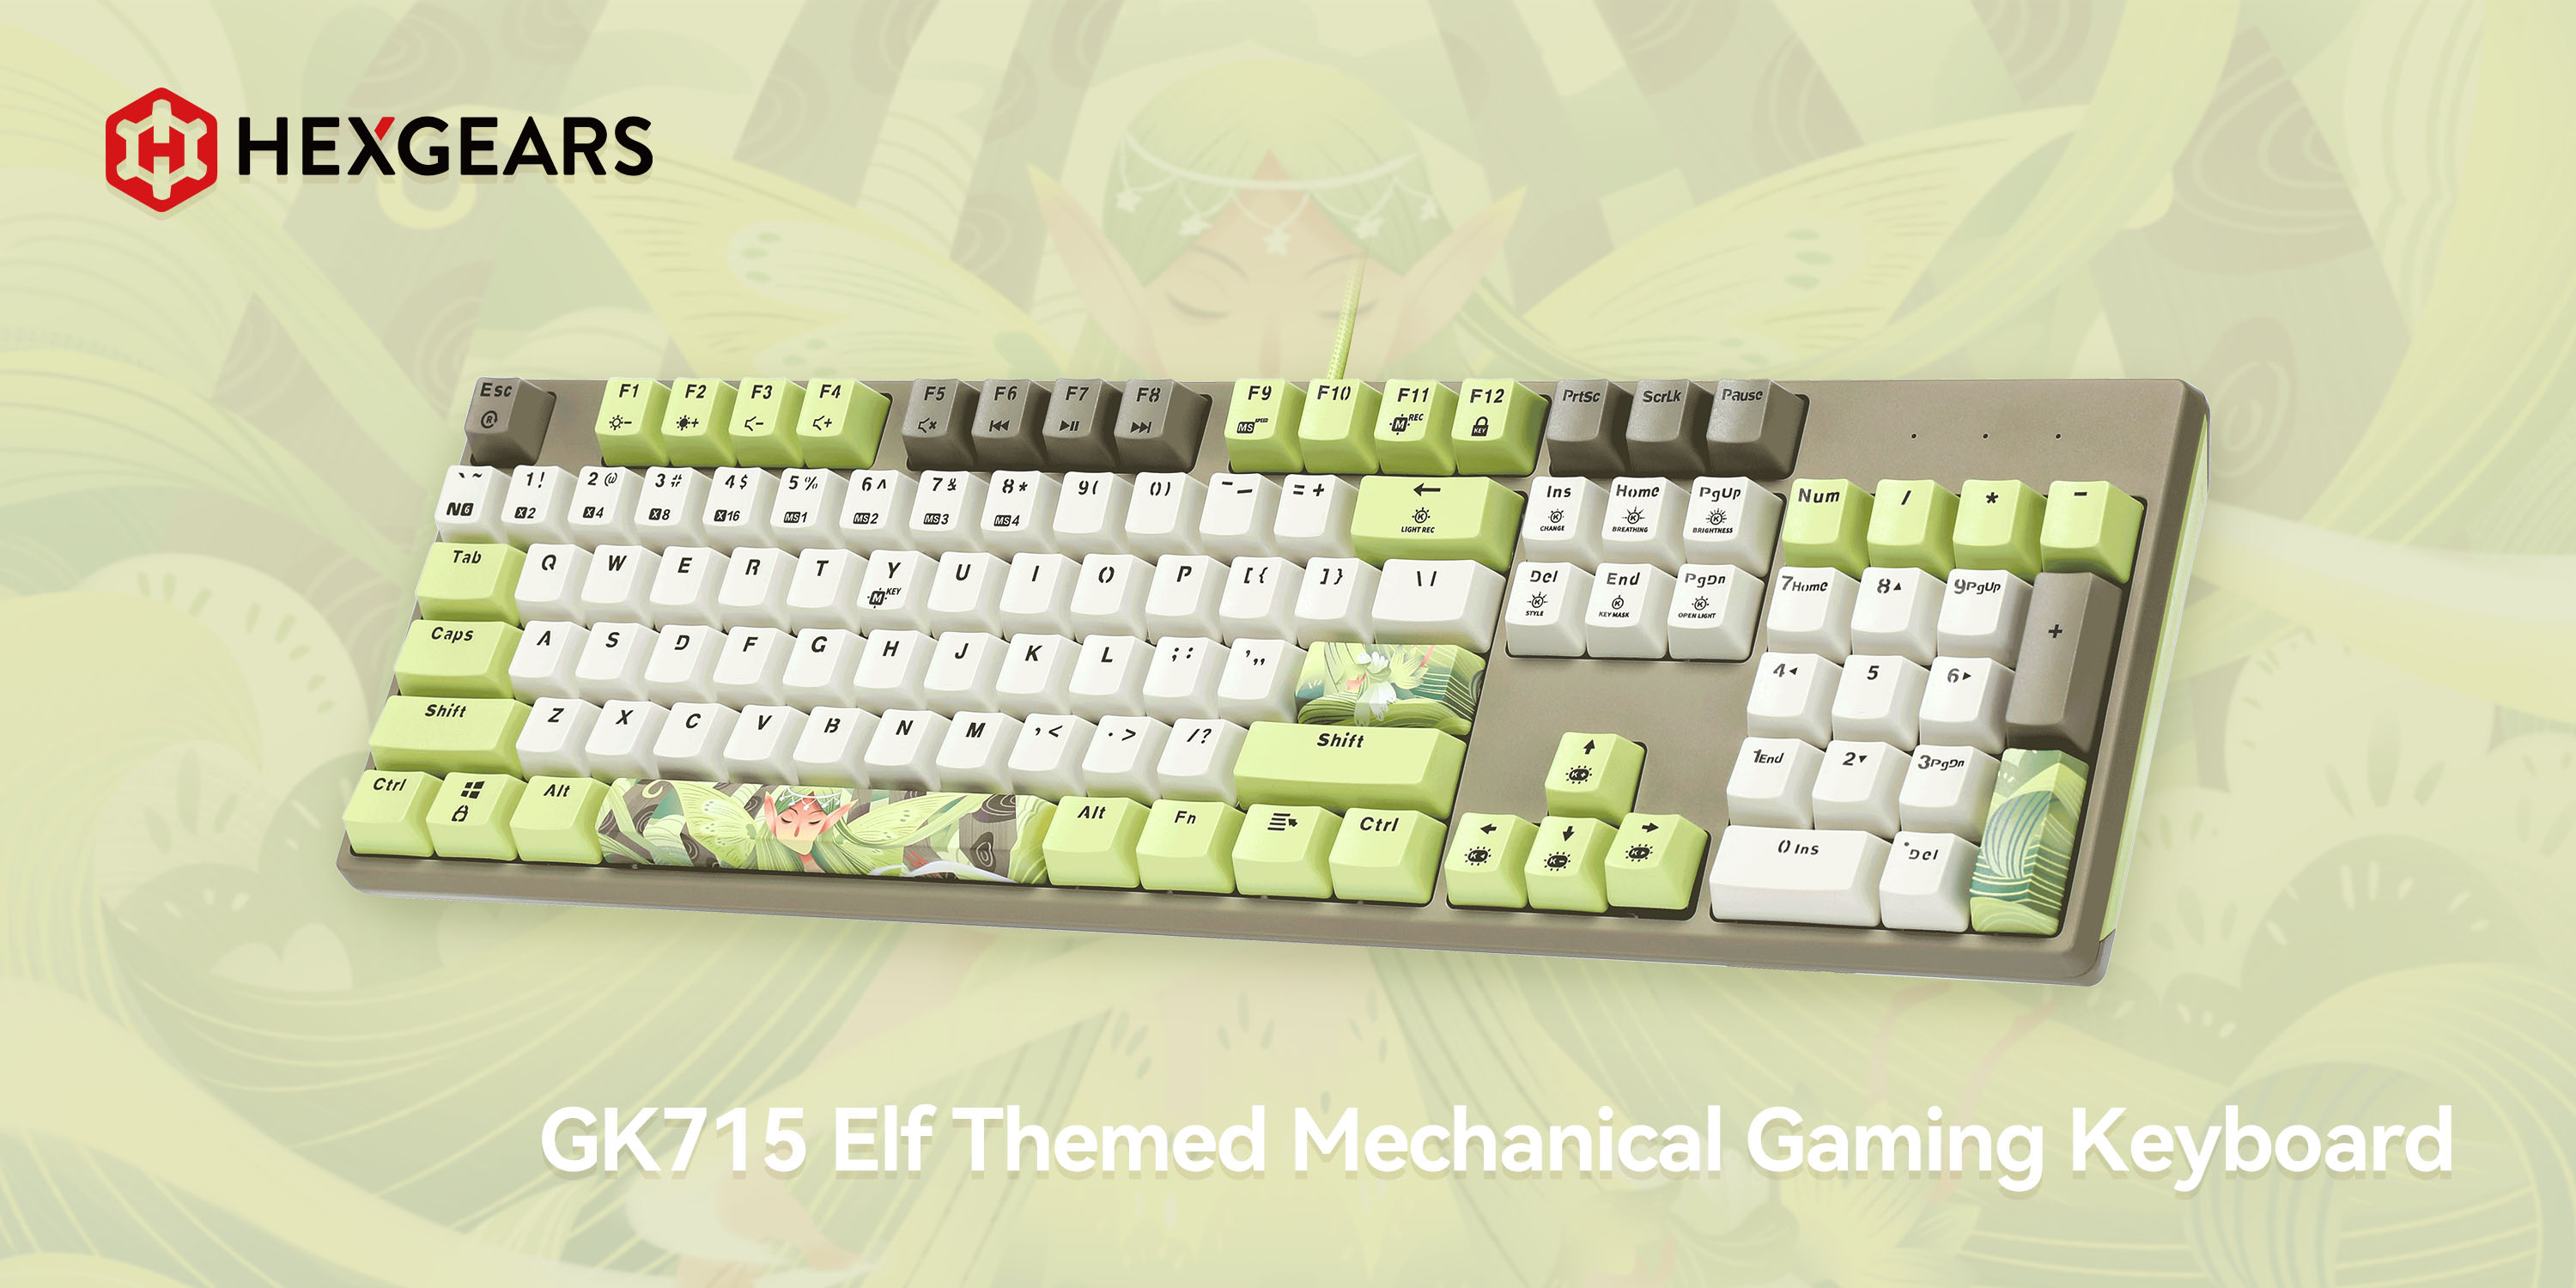 Hexgears GK715 Themed Mechanical Gaming Keyboard